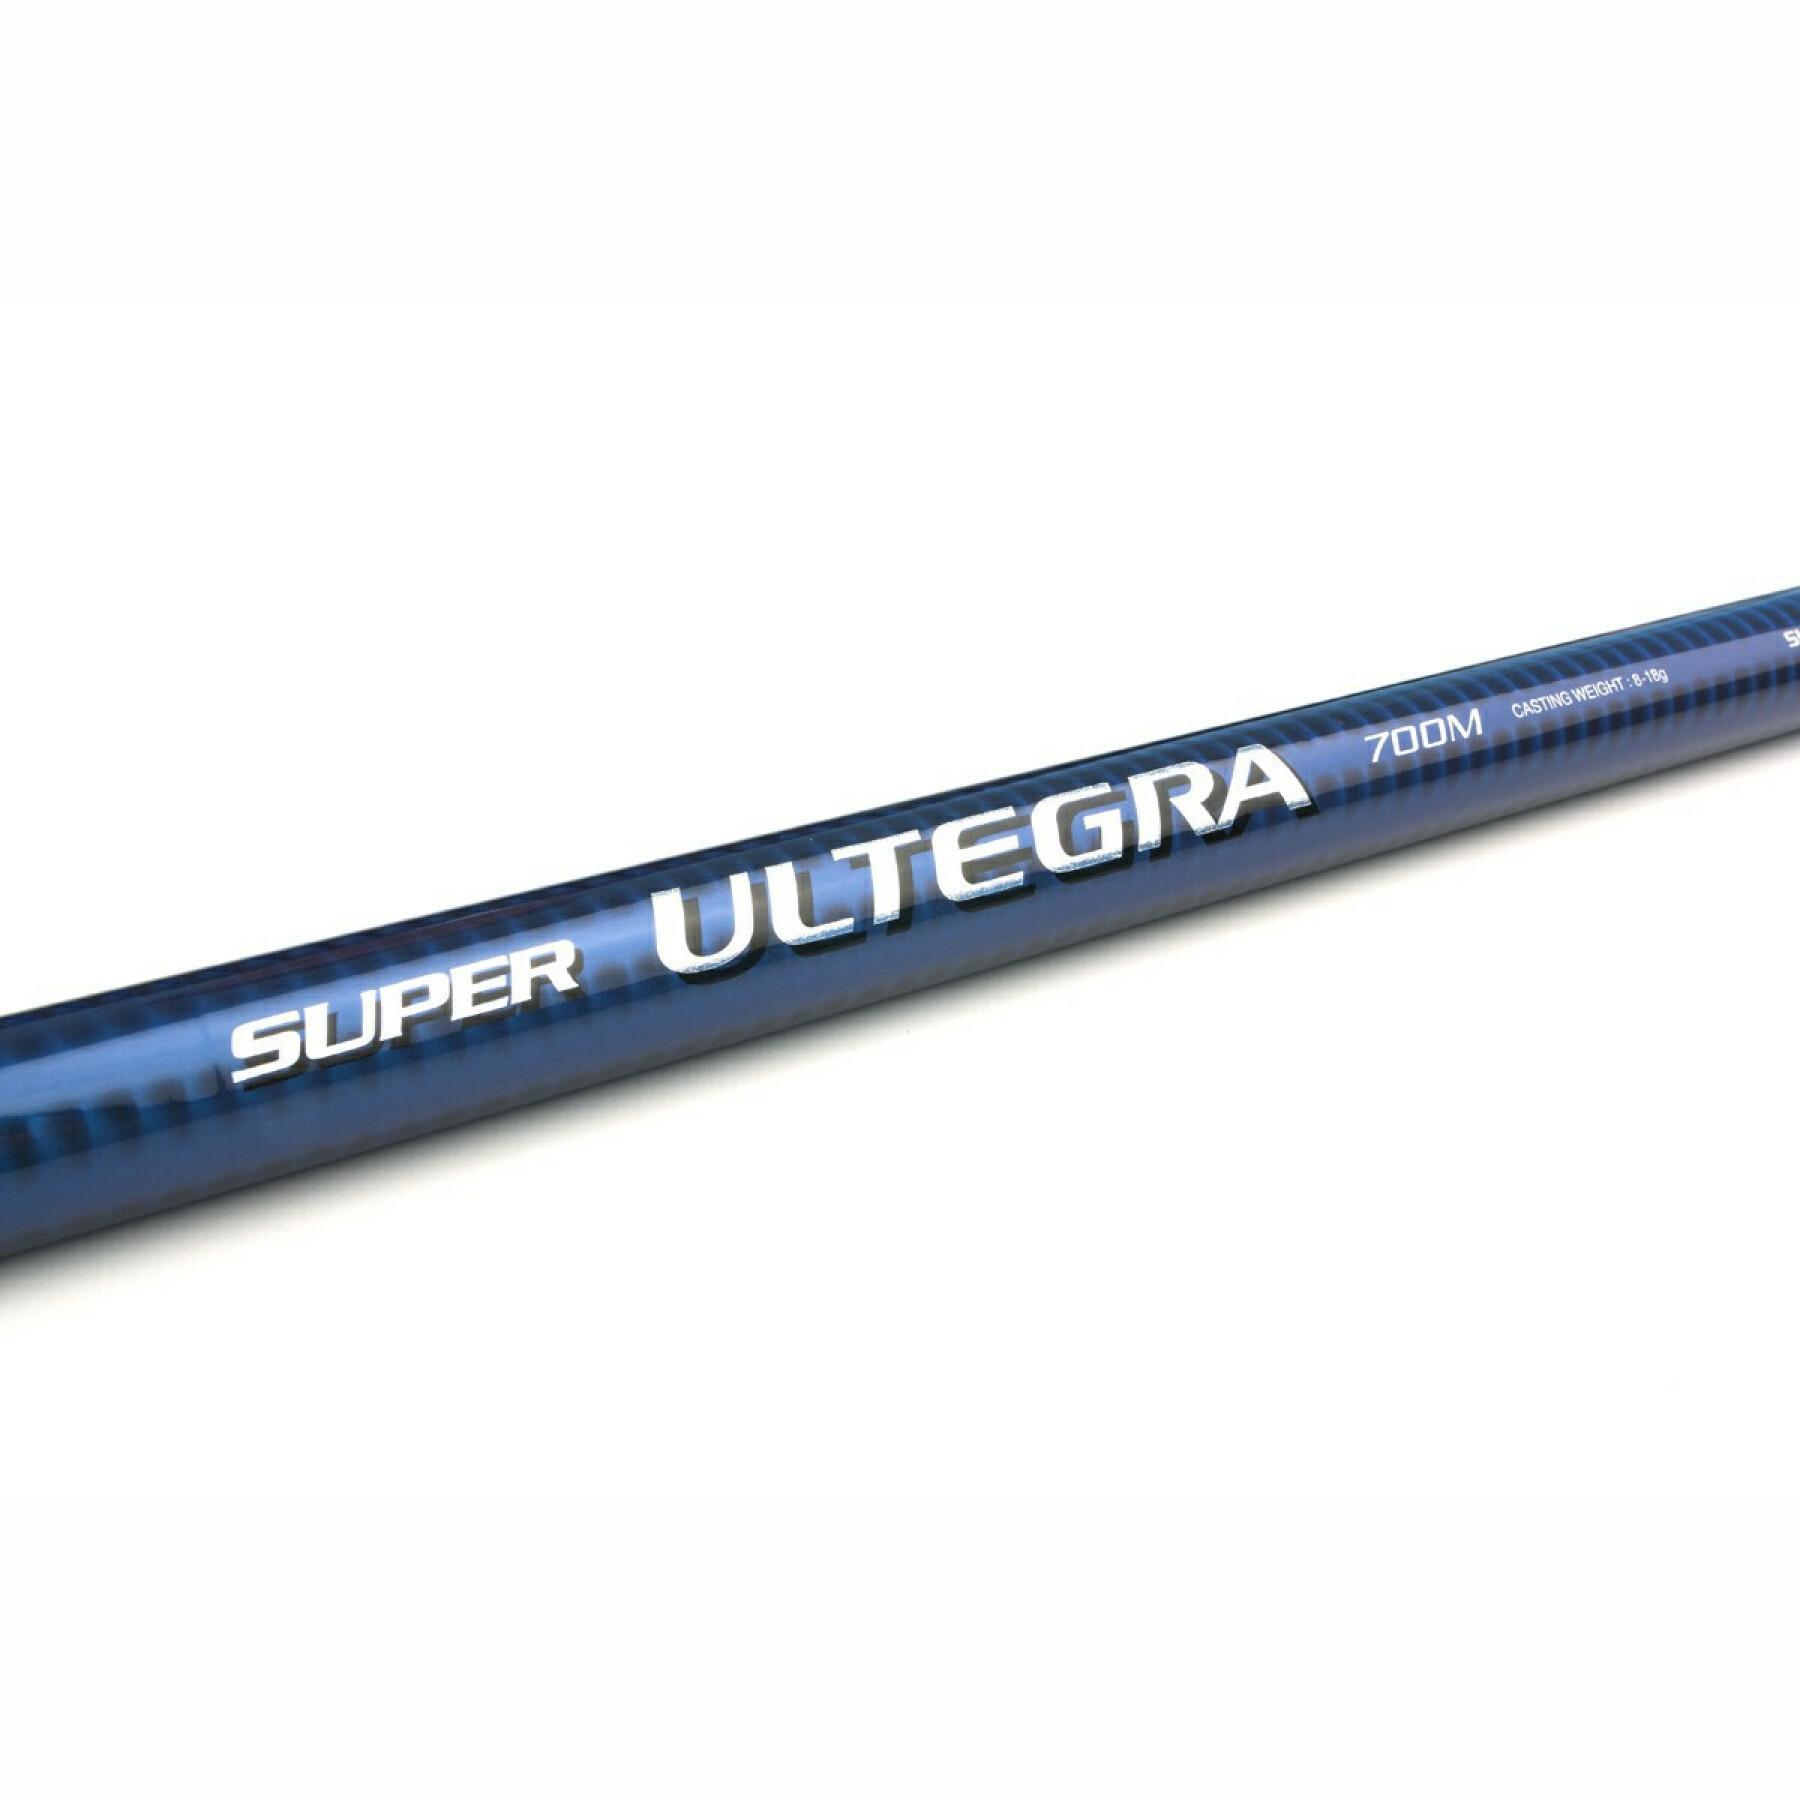 Telescopic cane Shimano Super Ultegra Heavy 15-25g